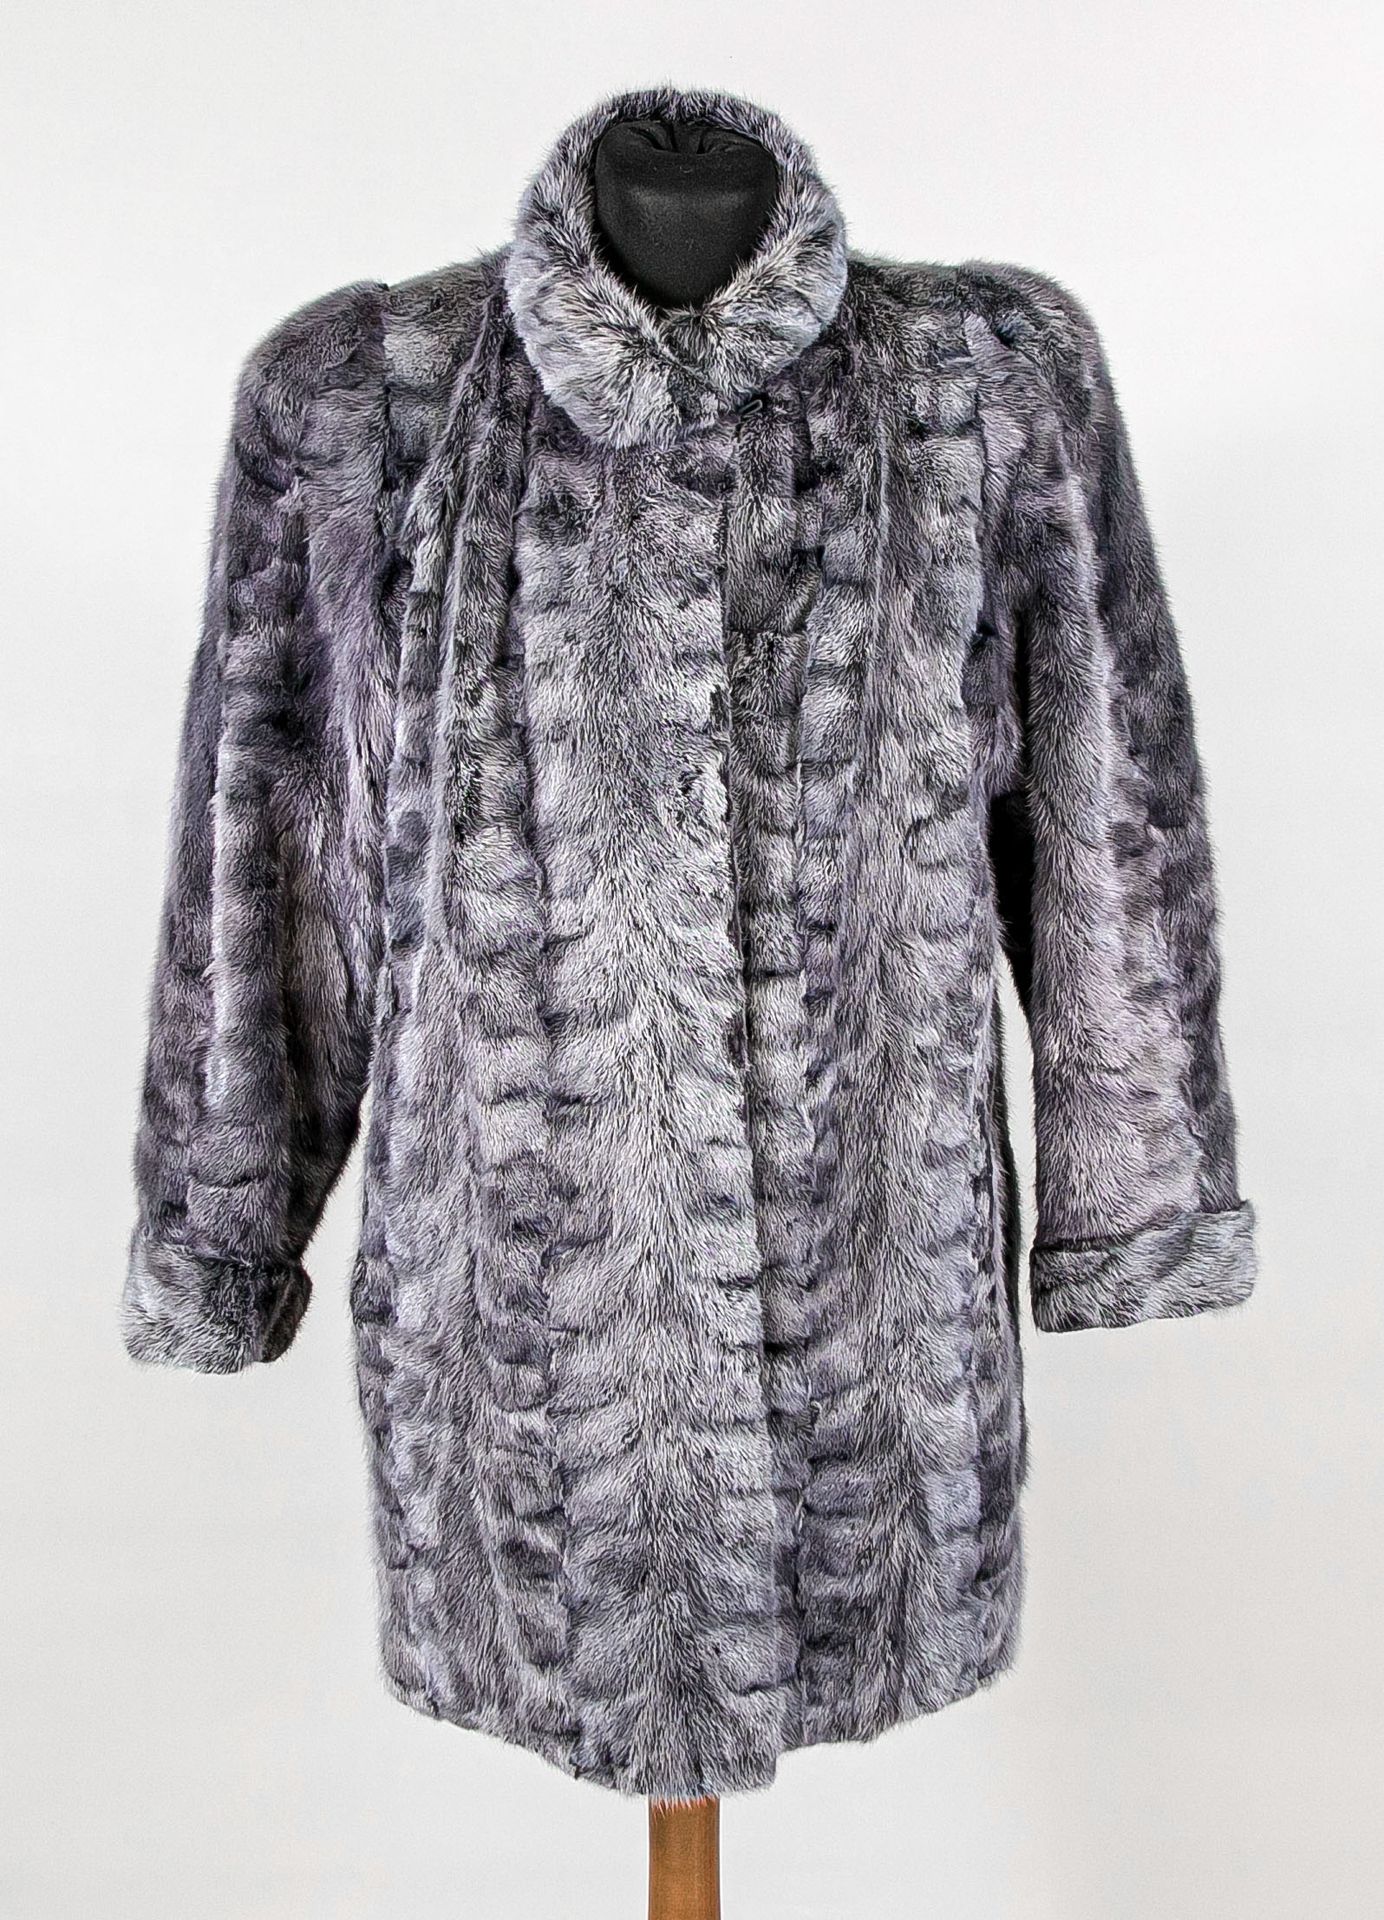 Null 女士貂皮短外套/围巾，20世纪下半叶，可能是染色的。衬里的标签上刻有 "Pelz-Graupner Bremen"。没有标明尺寸，背面有磨损痕迹。